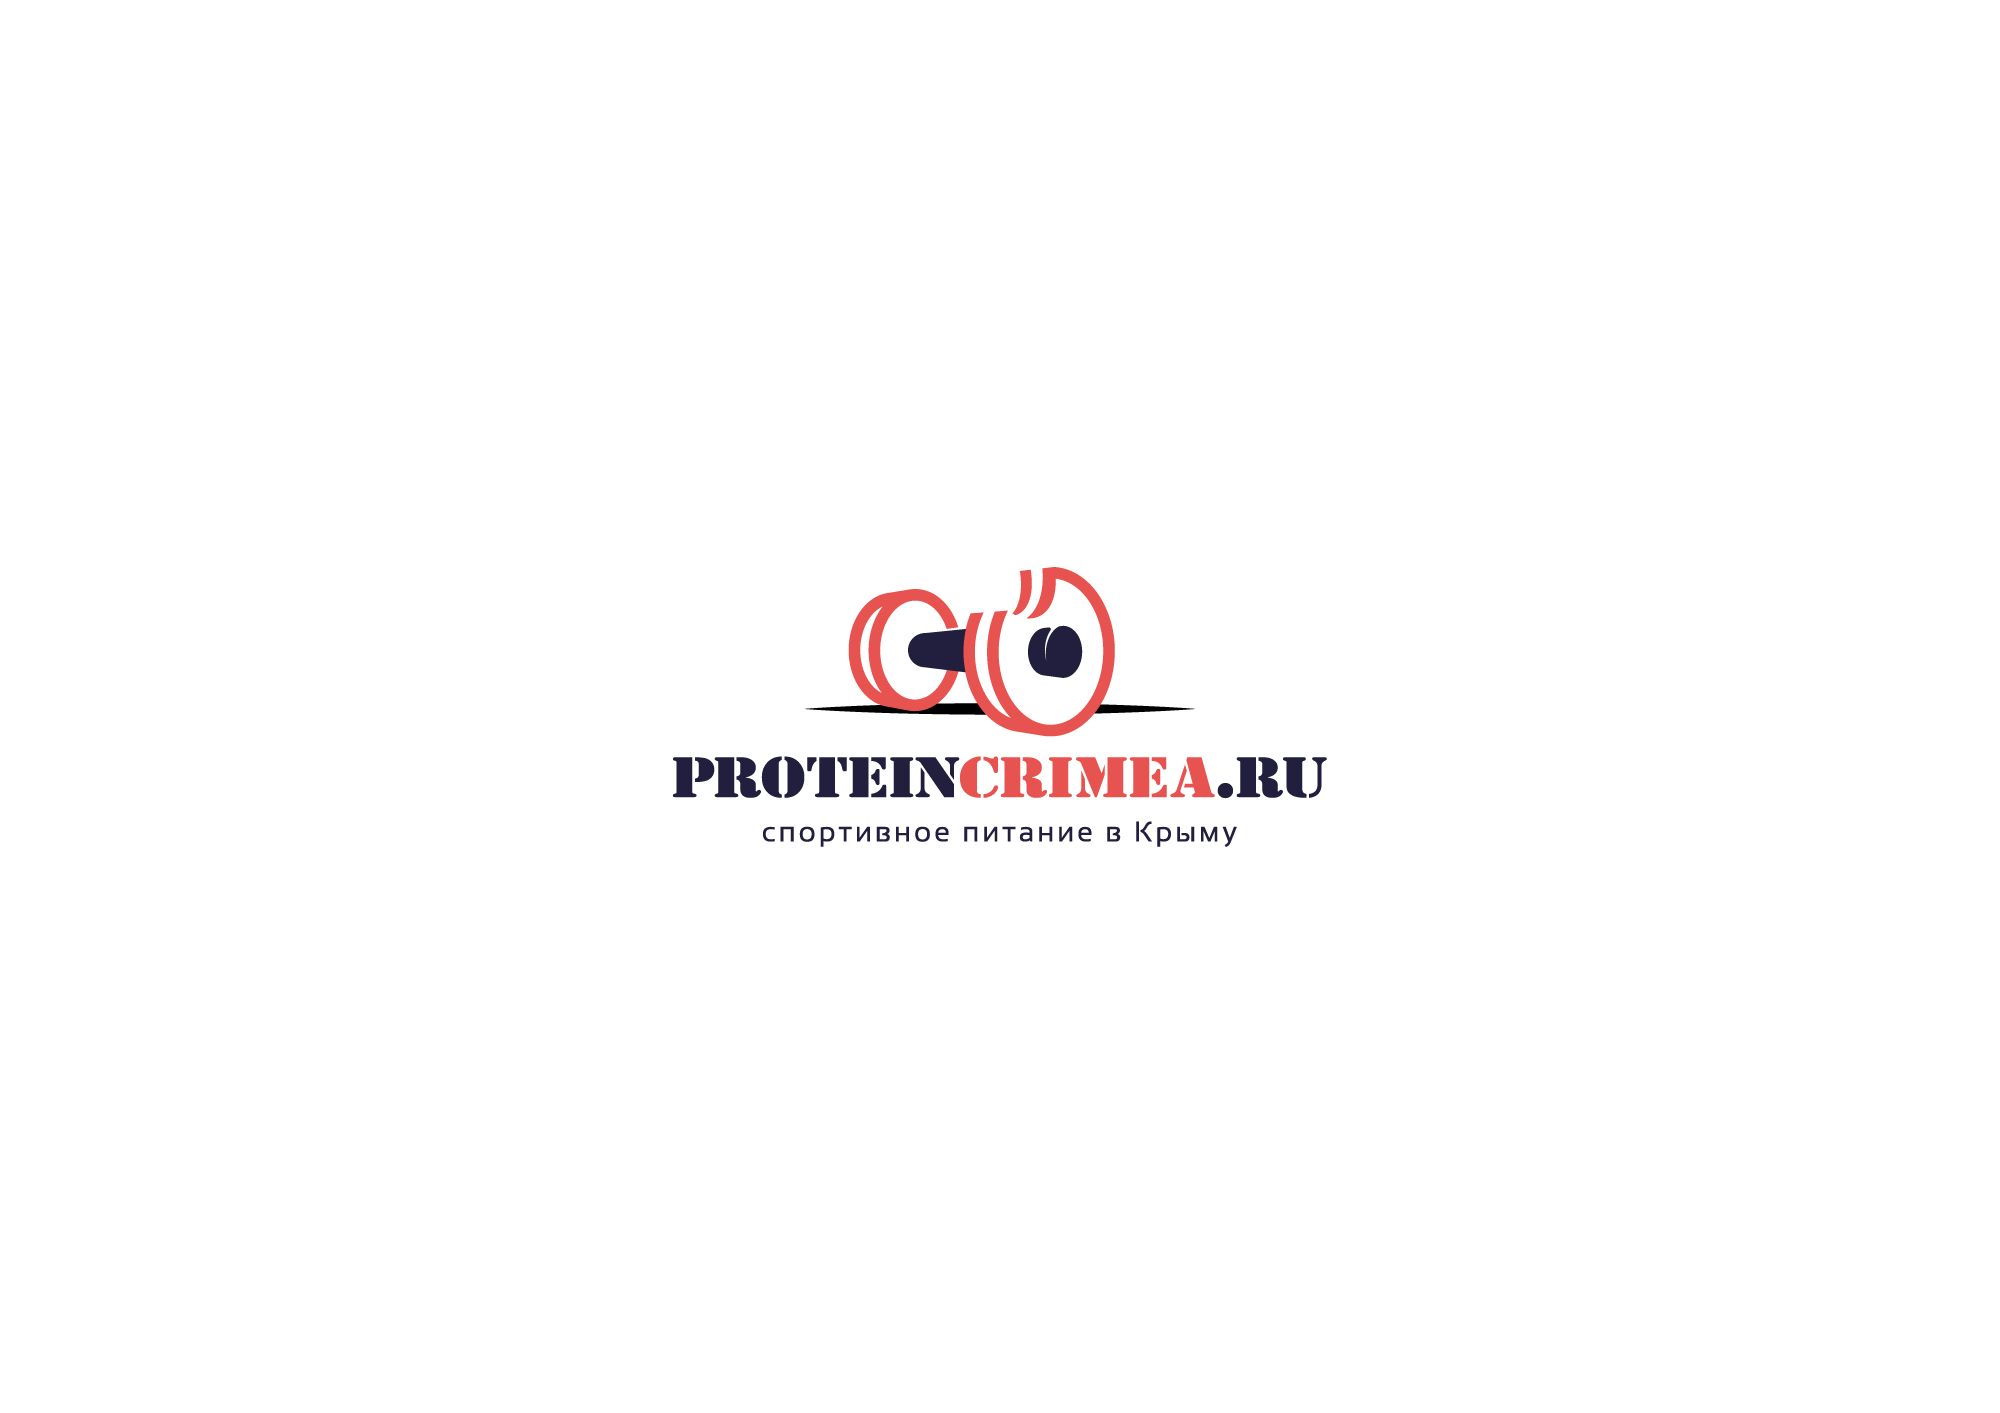 Логотип для ProteinCrimea.ru - дизайнер zanru